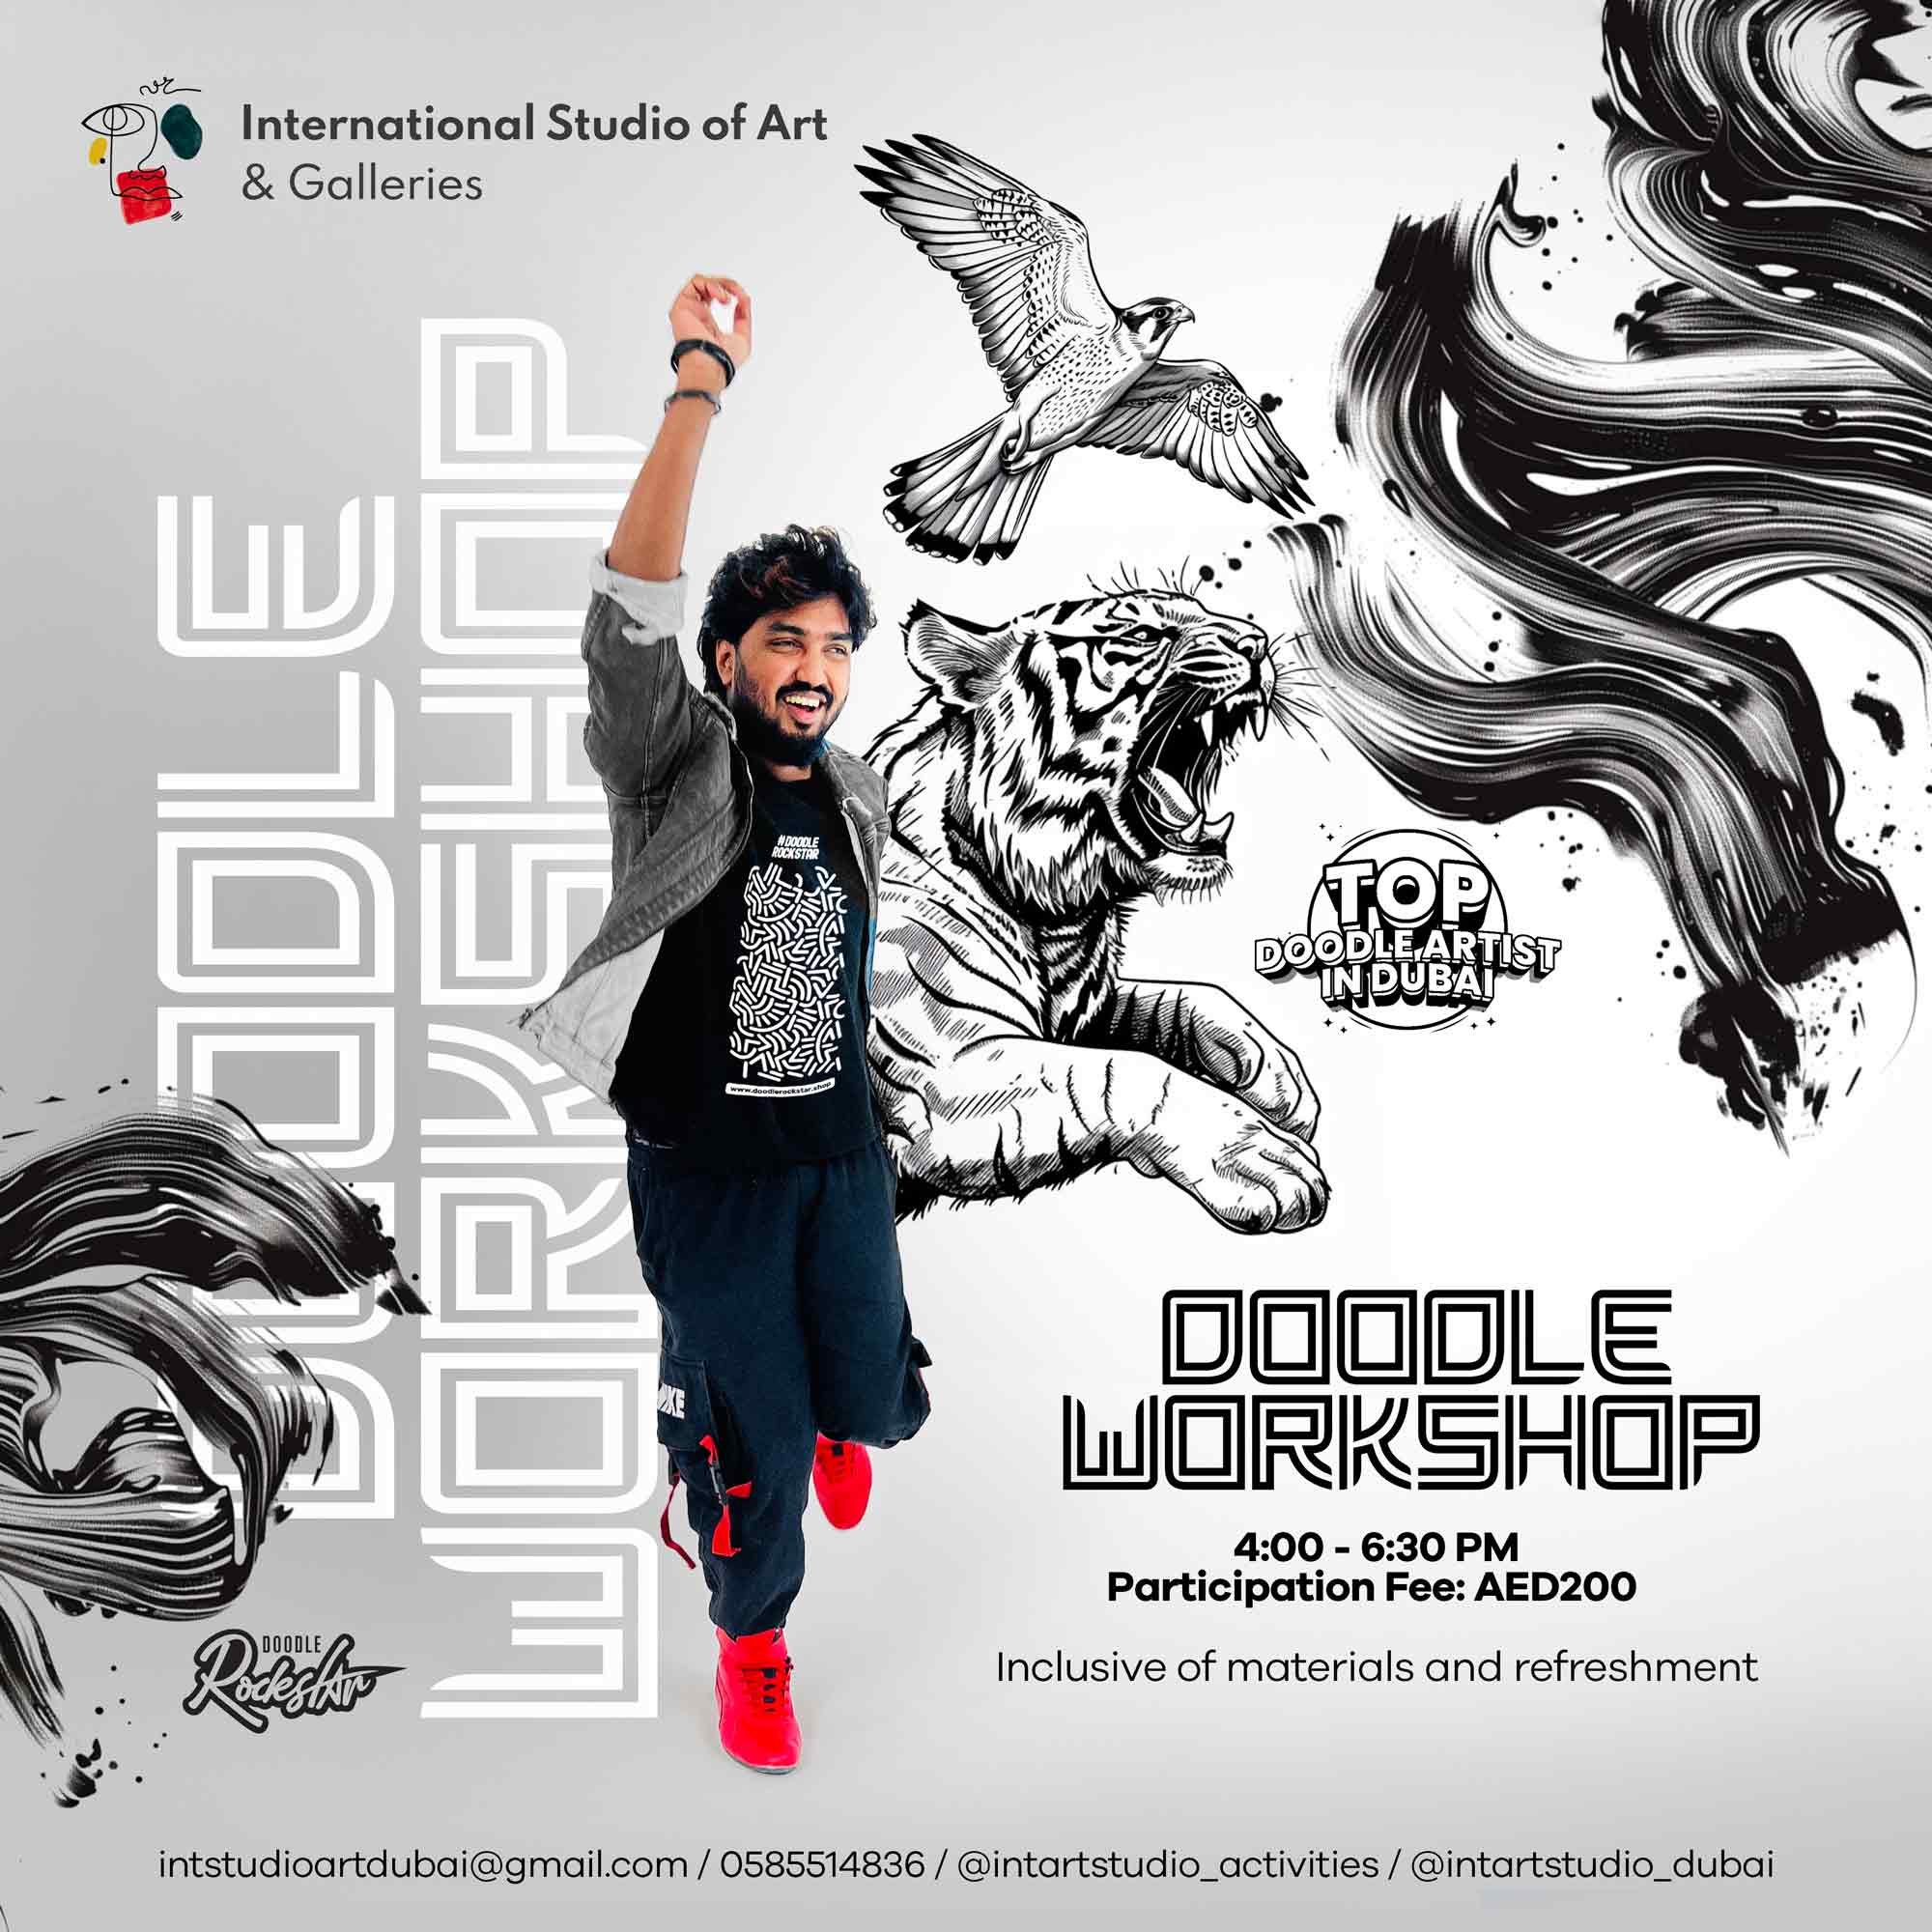 Doodle Workshop at International Studio of Art & Gallery, Dubai